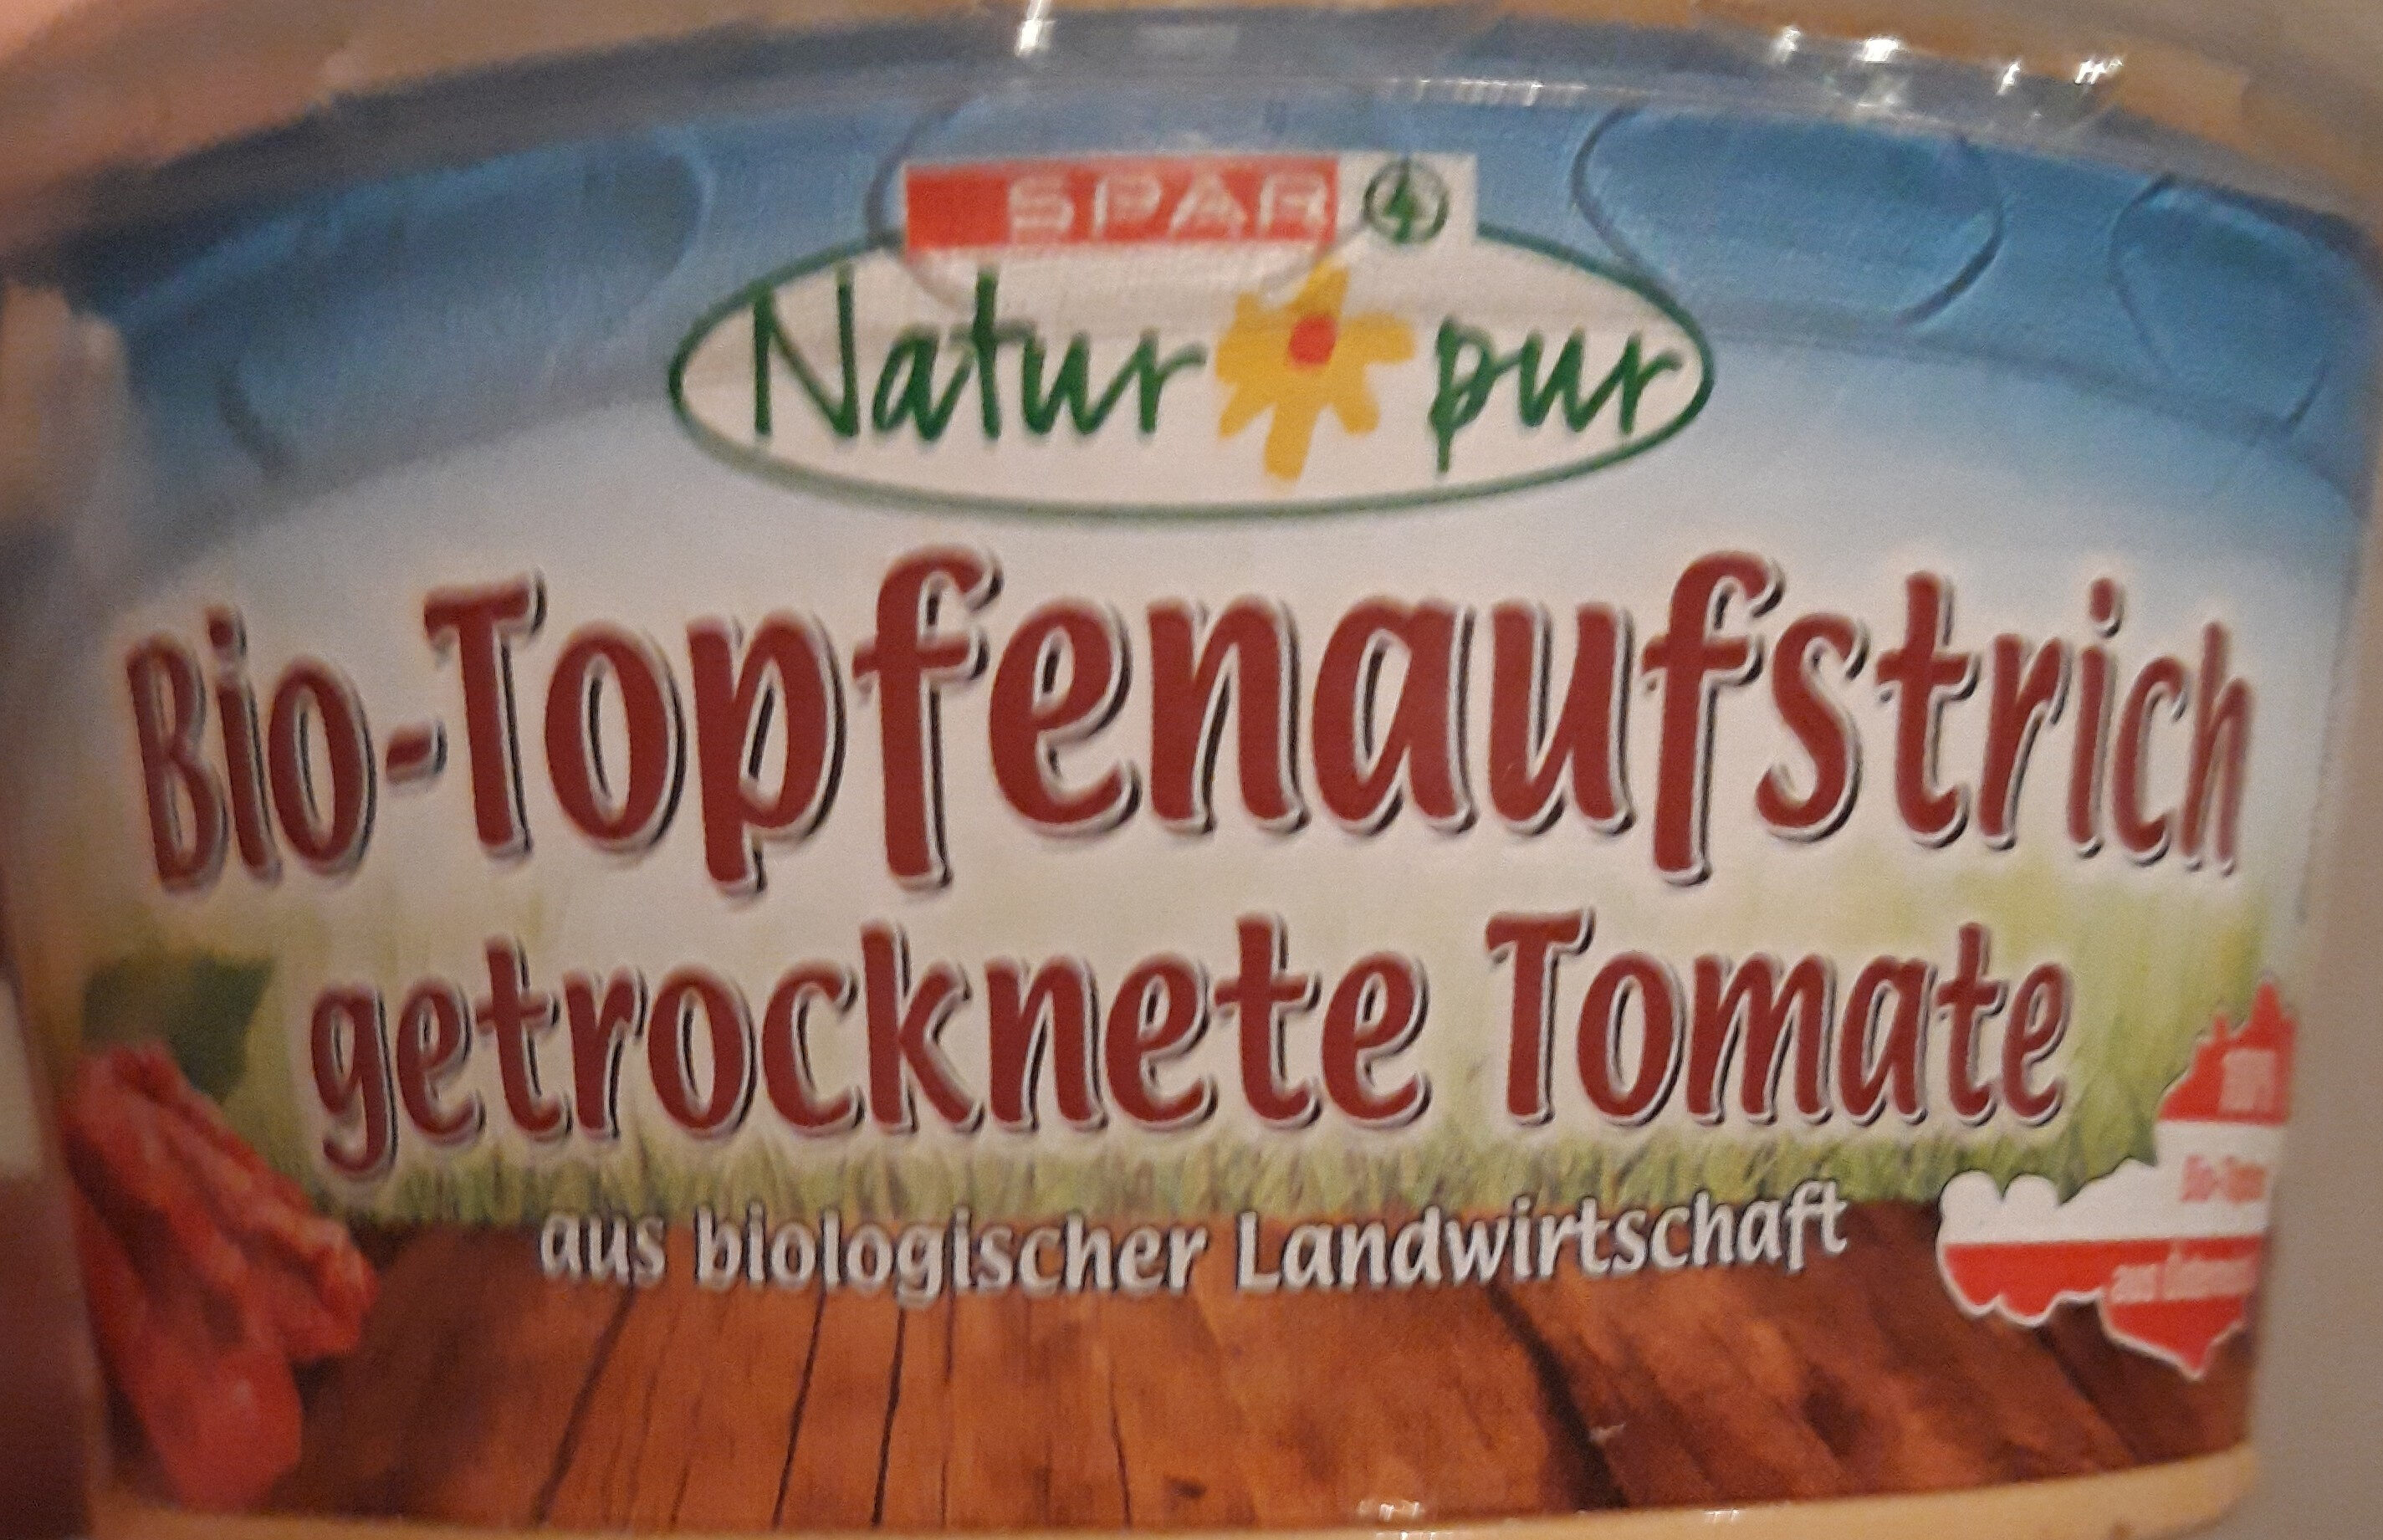 Bio-Topfenaufstrich getrocknete Tomate - Product - de